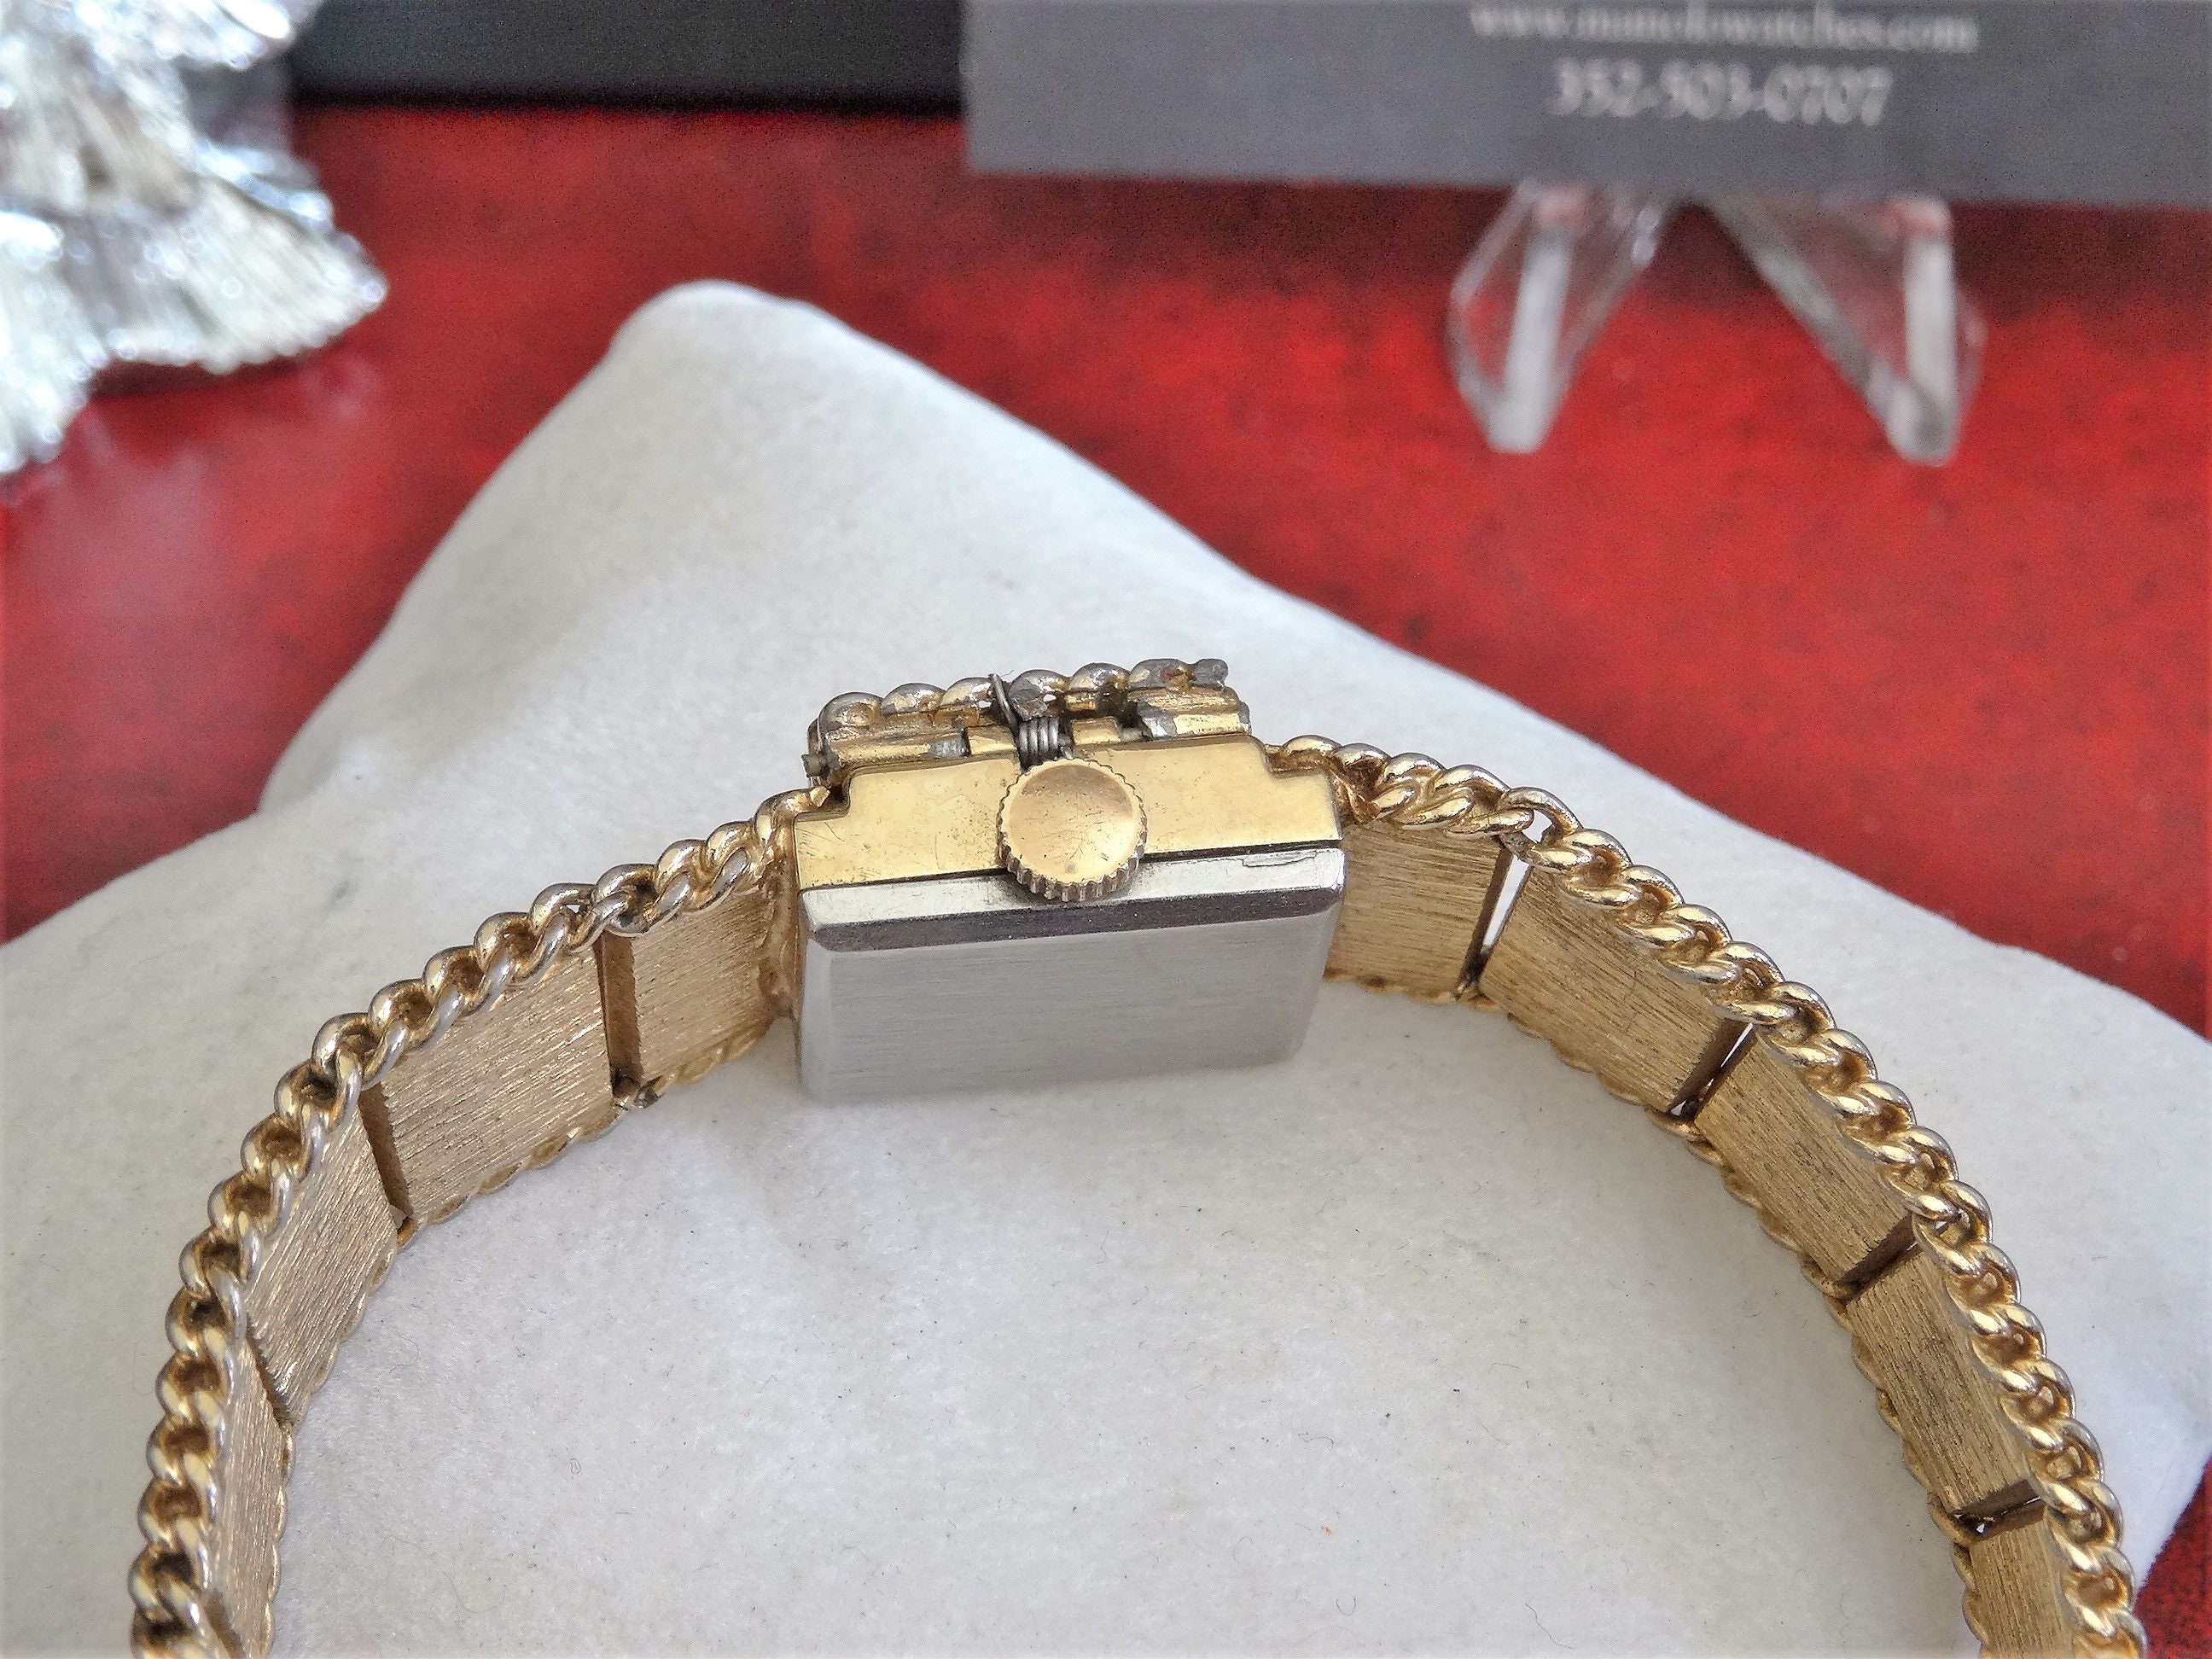 Vintage Swank 17 Jewel Ladies Bracelet Watch Gold Tone Analog Mechanical  14mm